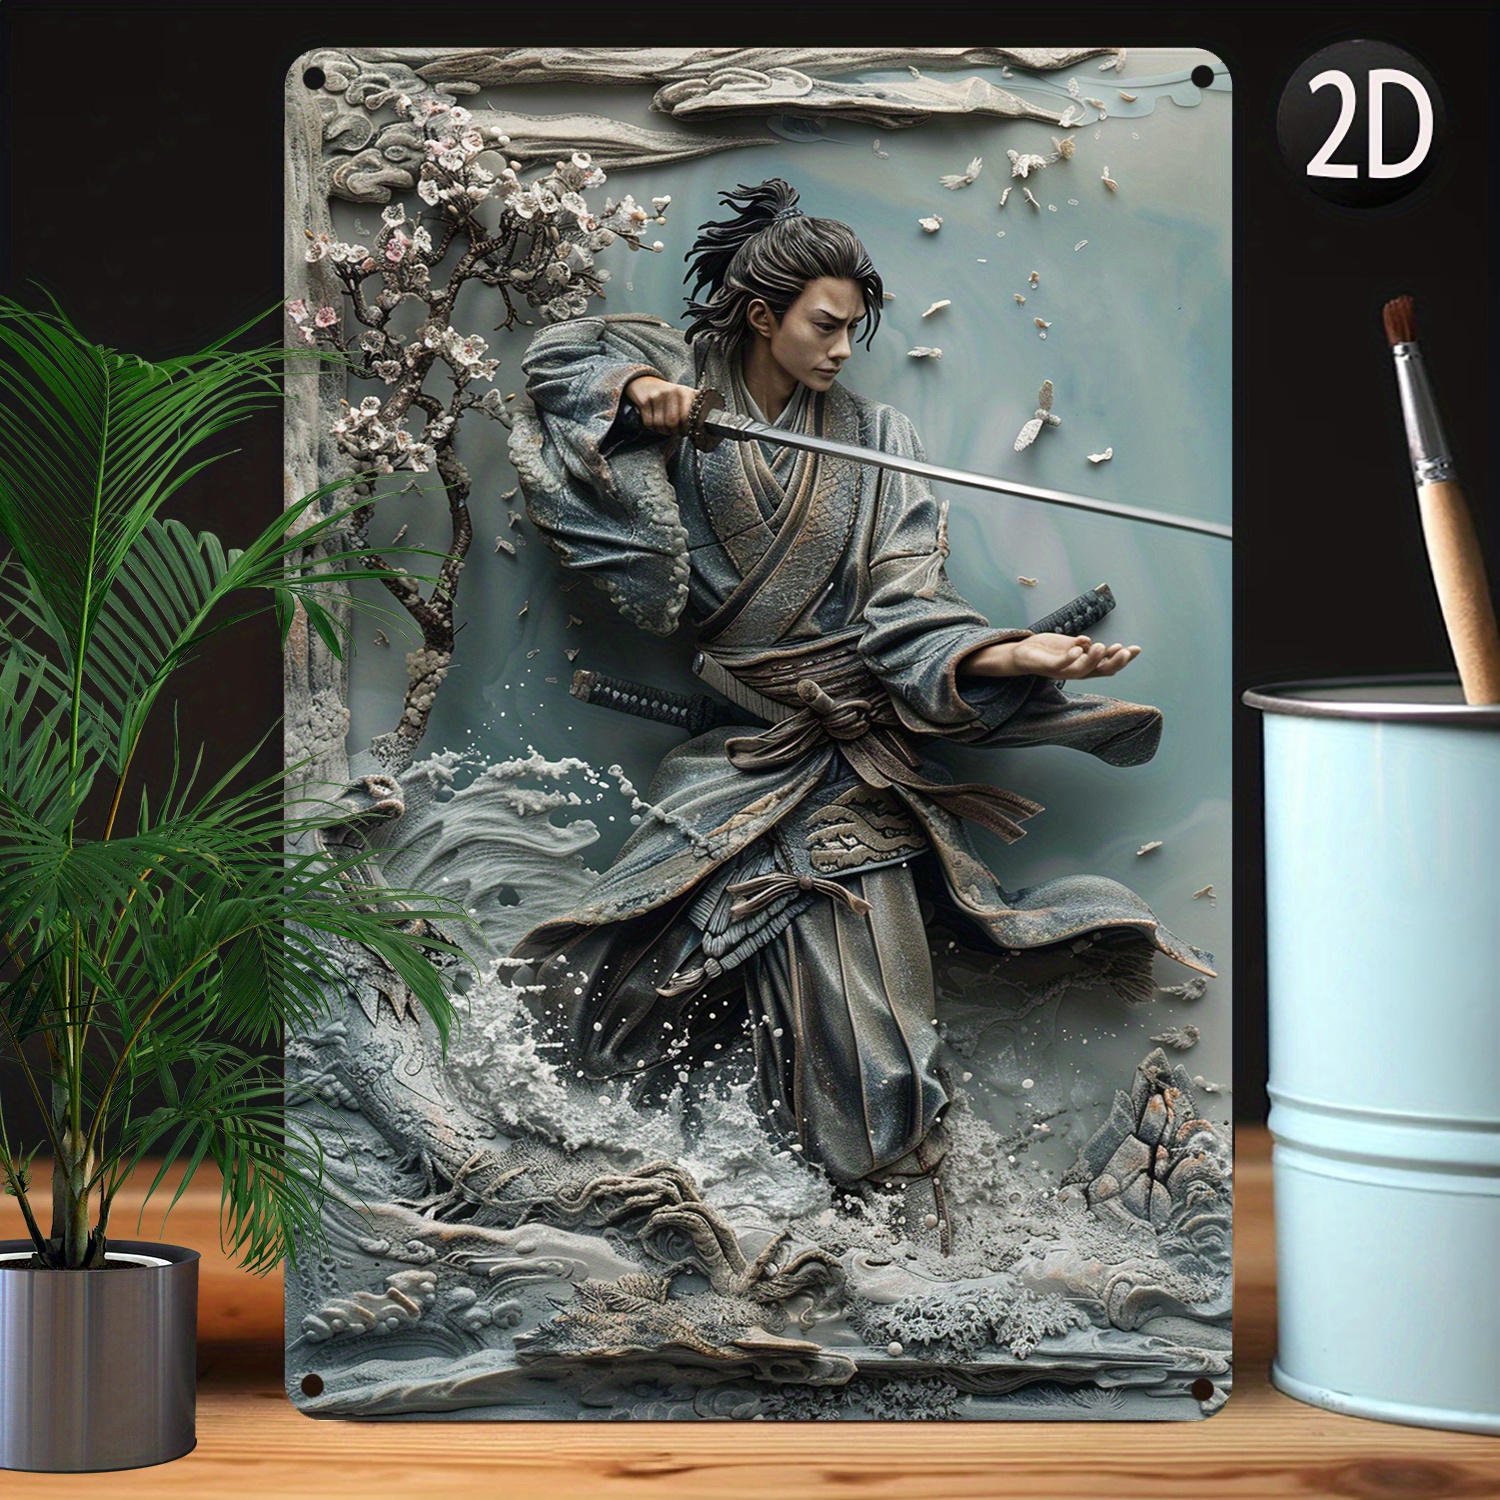 

8x12 Inch (20x30cm) 100% Aluminum Metal Sign: Japanese Samurai Warrior - Moisture Resistant, Durable, And Versatile For Home Decor